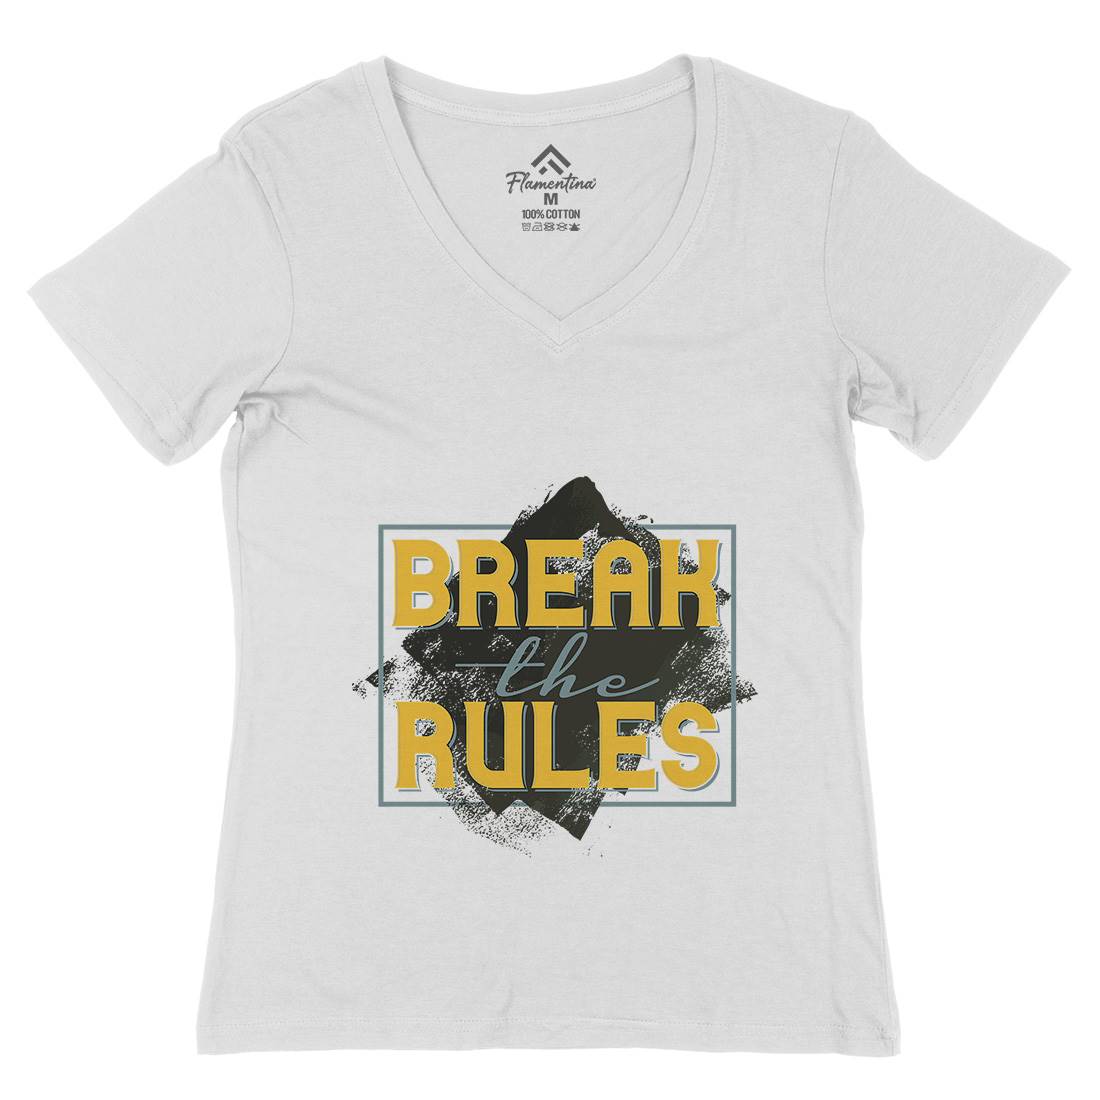 Break The Rules Womens Organic V-Neck T-Shirt Retro B291